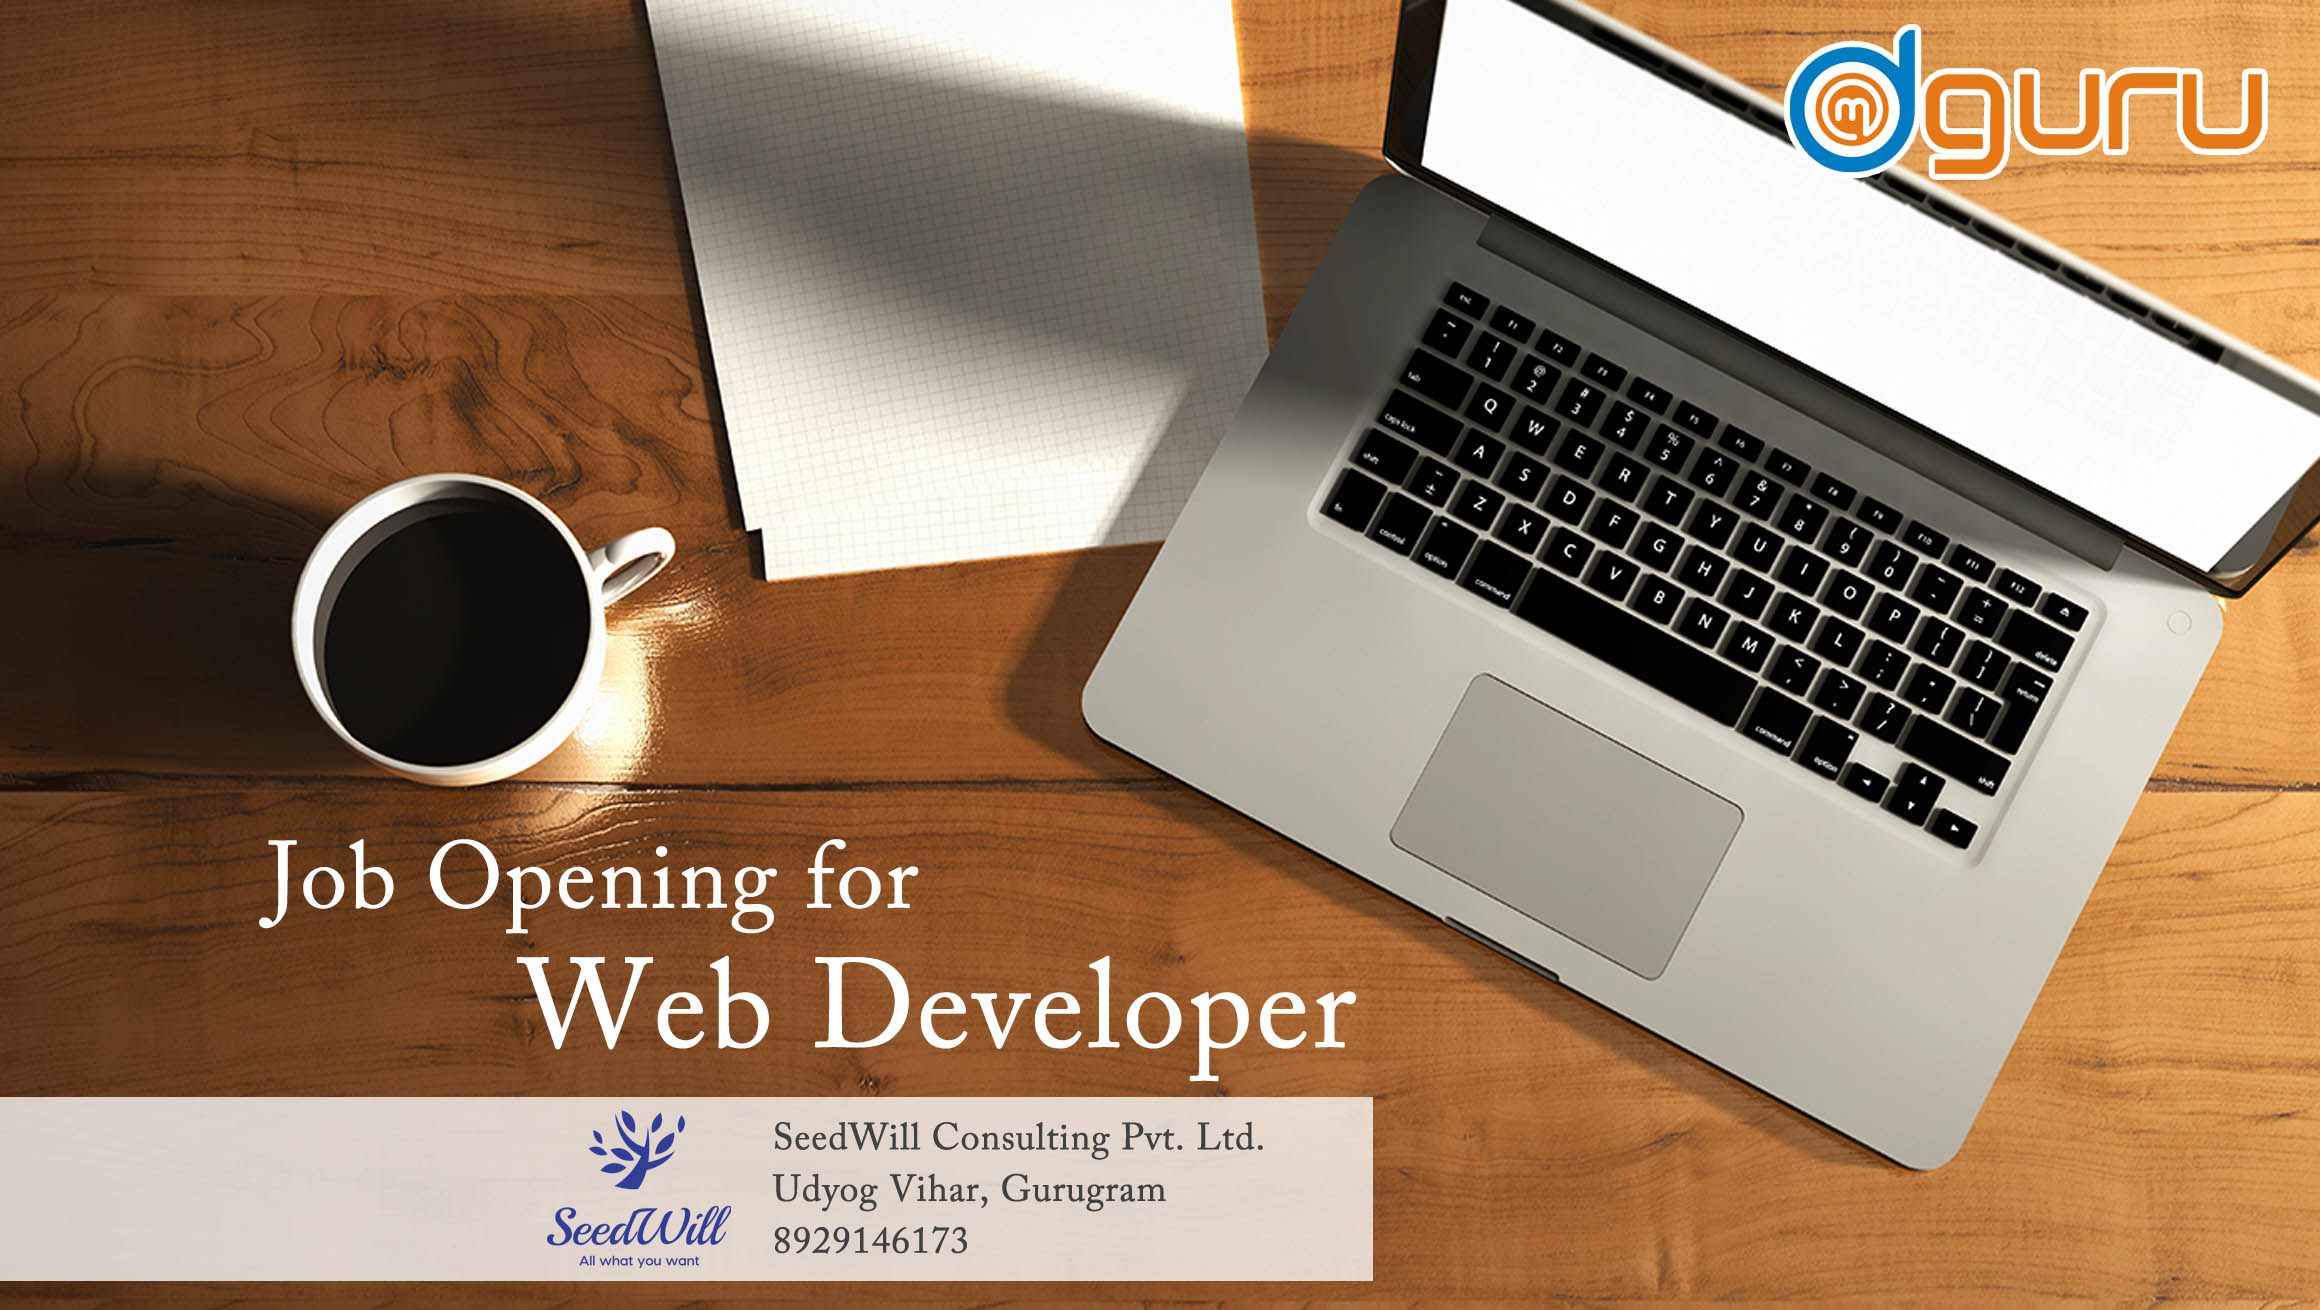 Web Developer Job at SeedWill Consulting PVT. LTD. Gurgaon, India